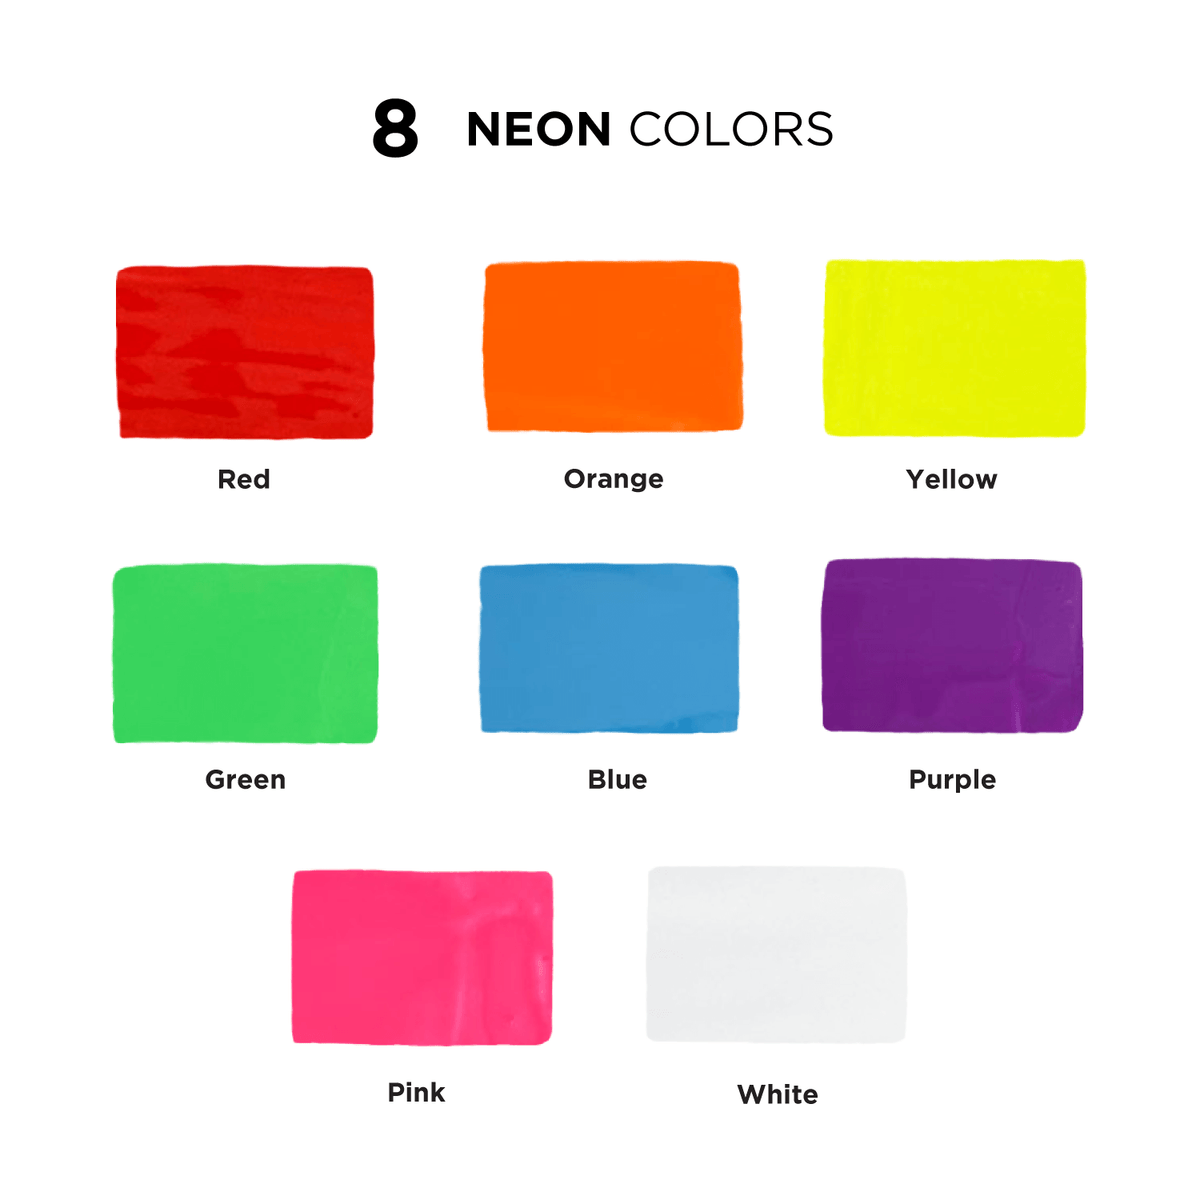 Bundle: 2 Packs of Window Chalk Markers - Neon and Classic Colors - 15mm Jumbo Nib